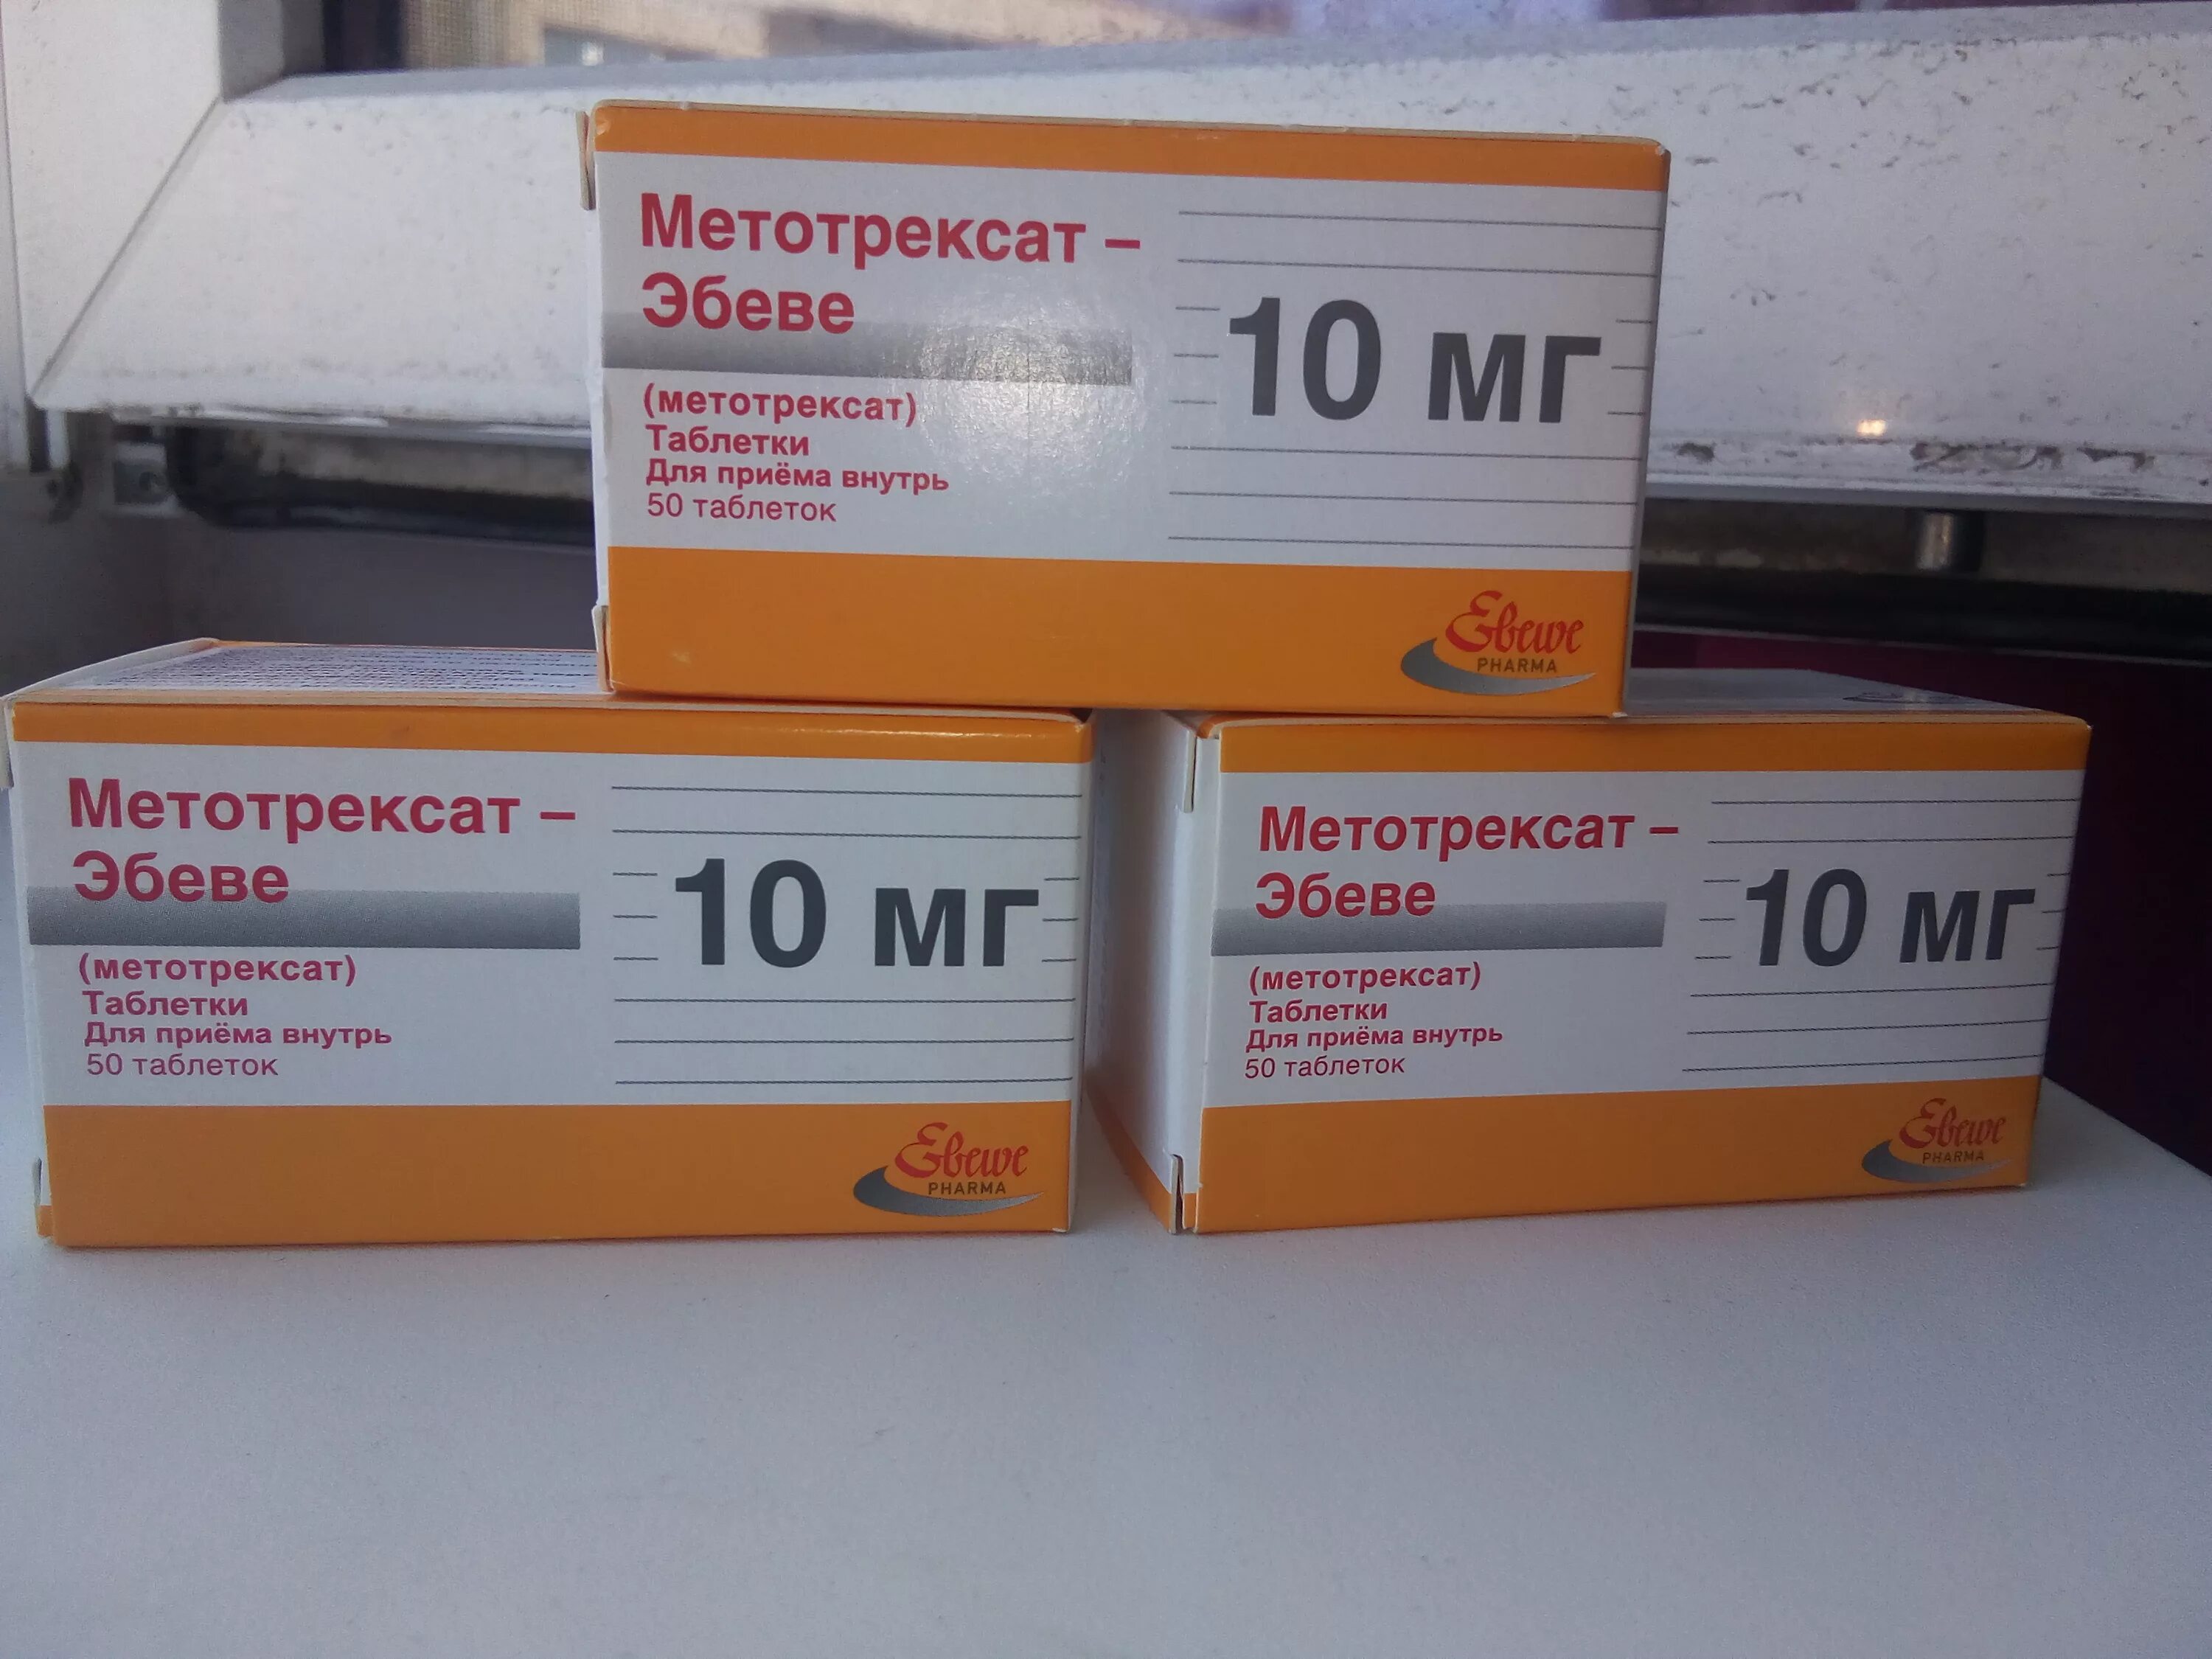 Метотрексат цена в таблетках